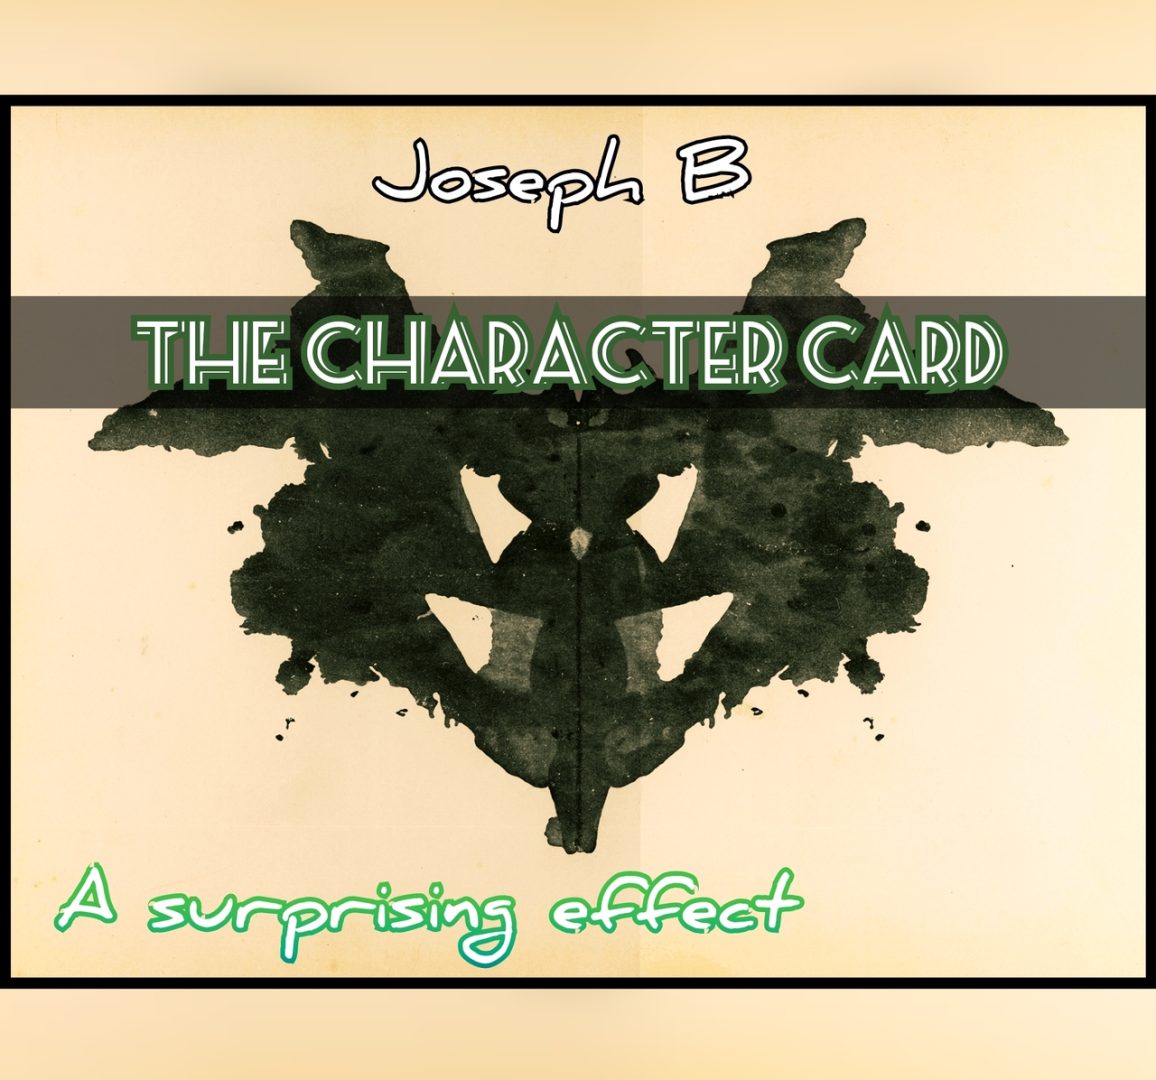 Joseph B - THE CHARACTER CARD